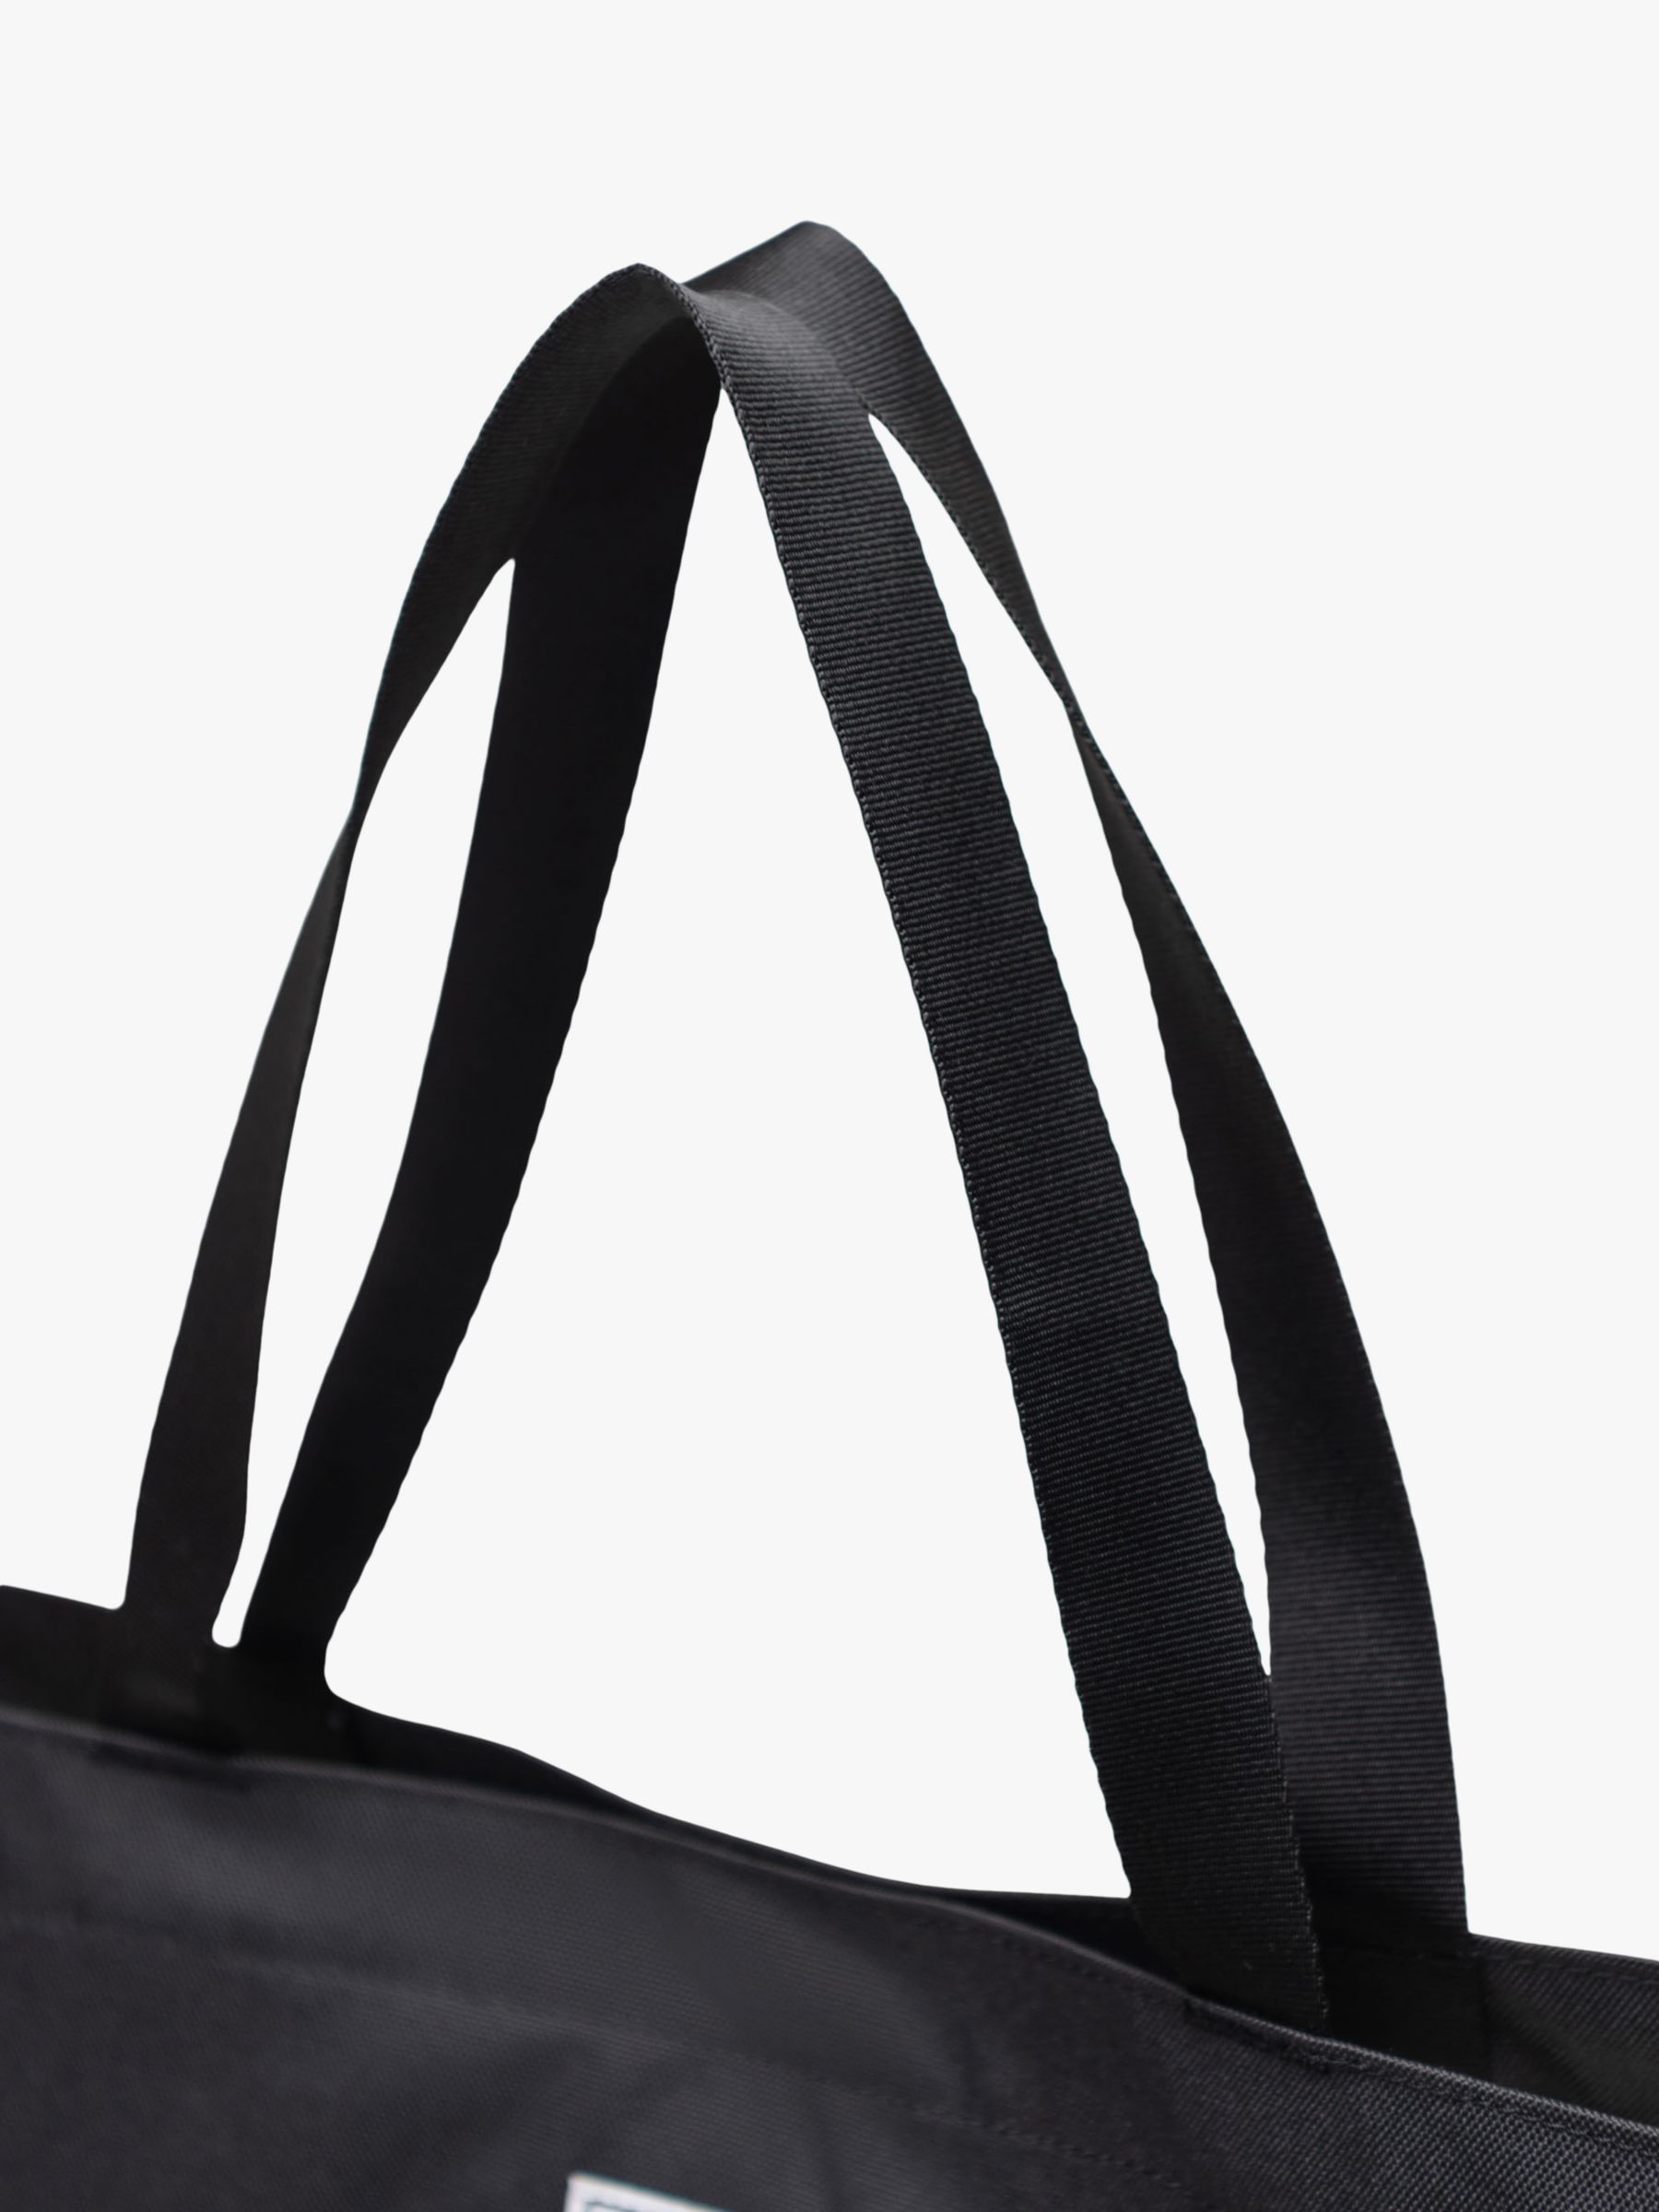 Herschel Supply Co. Kids' Solid Tote Bag, Black